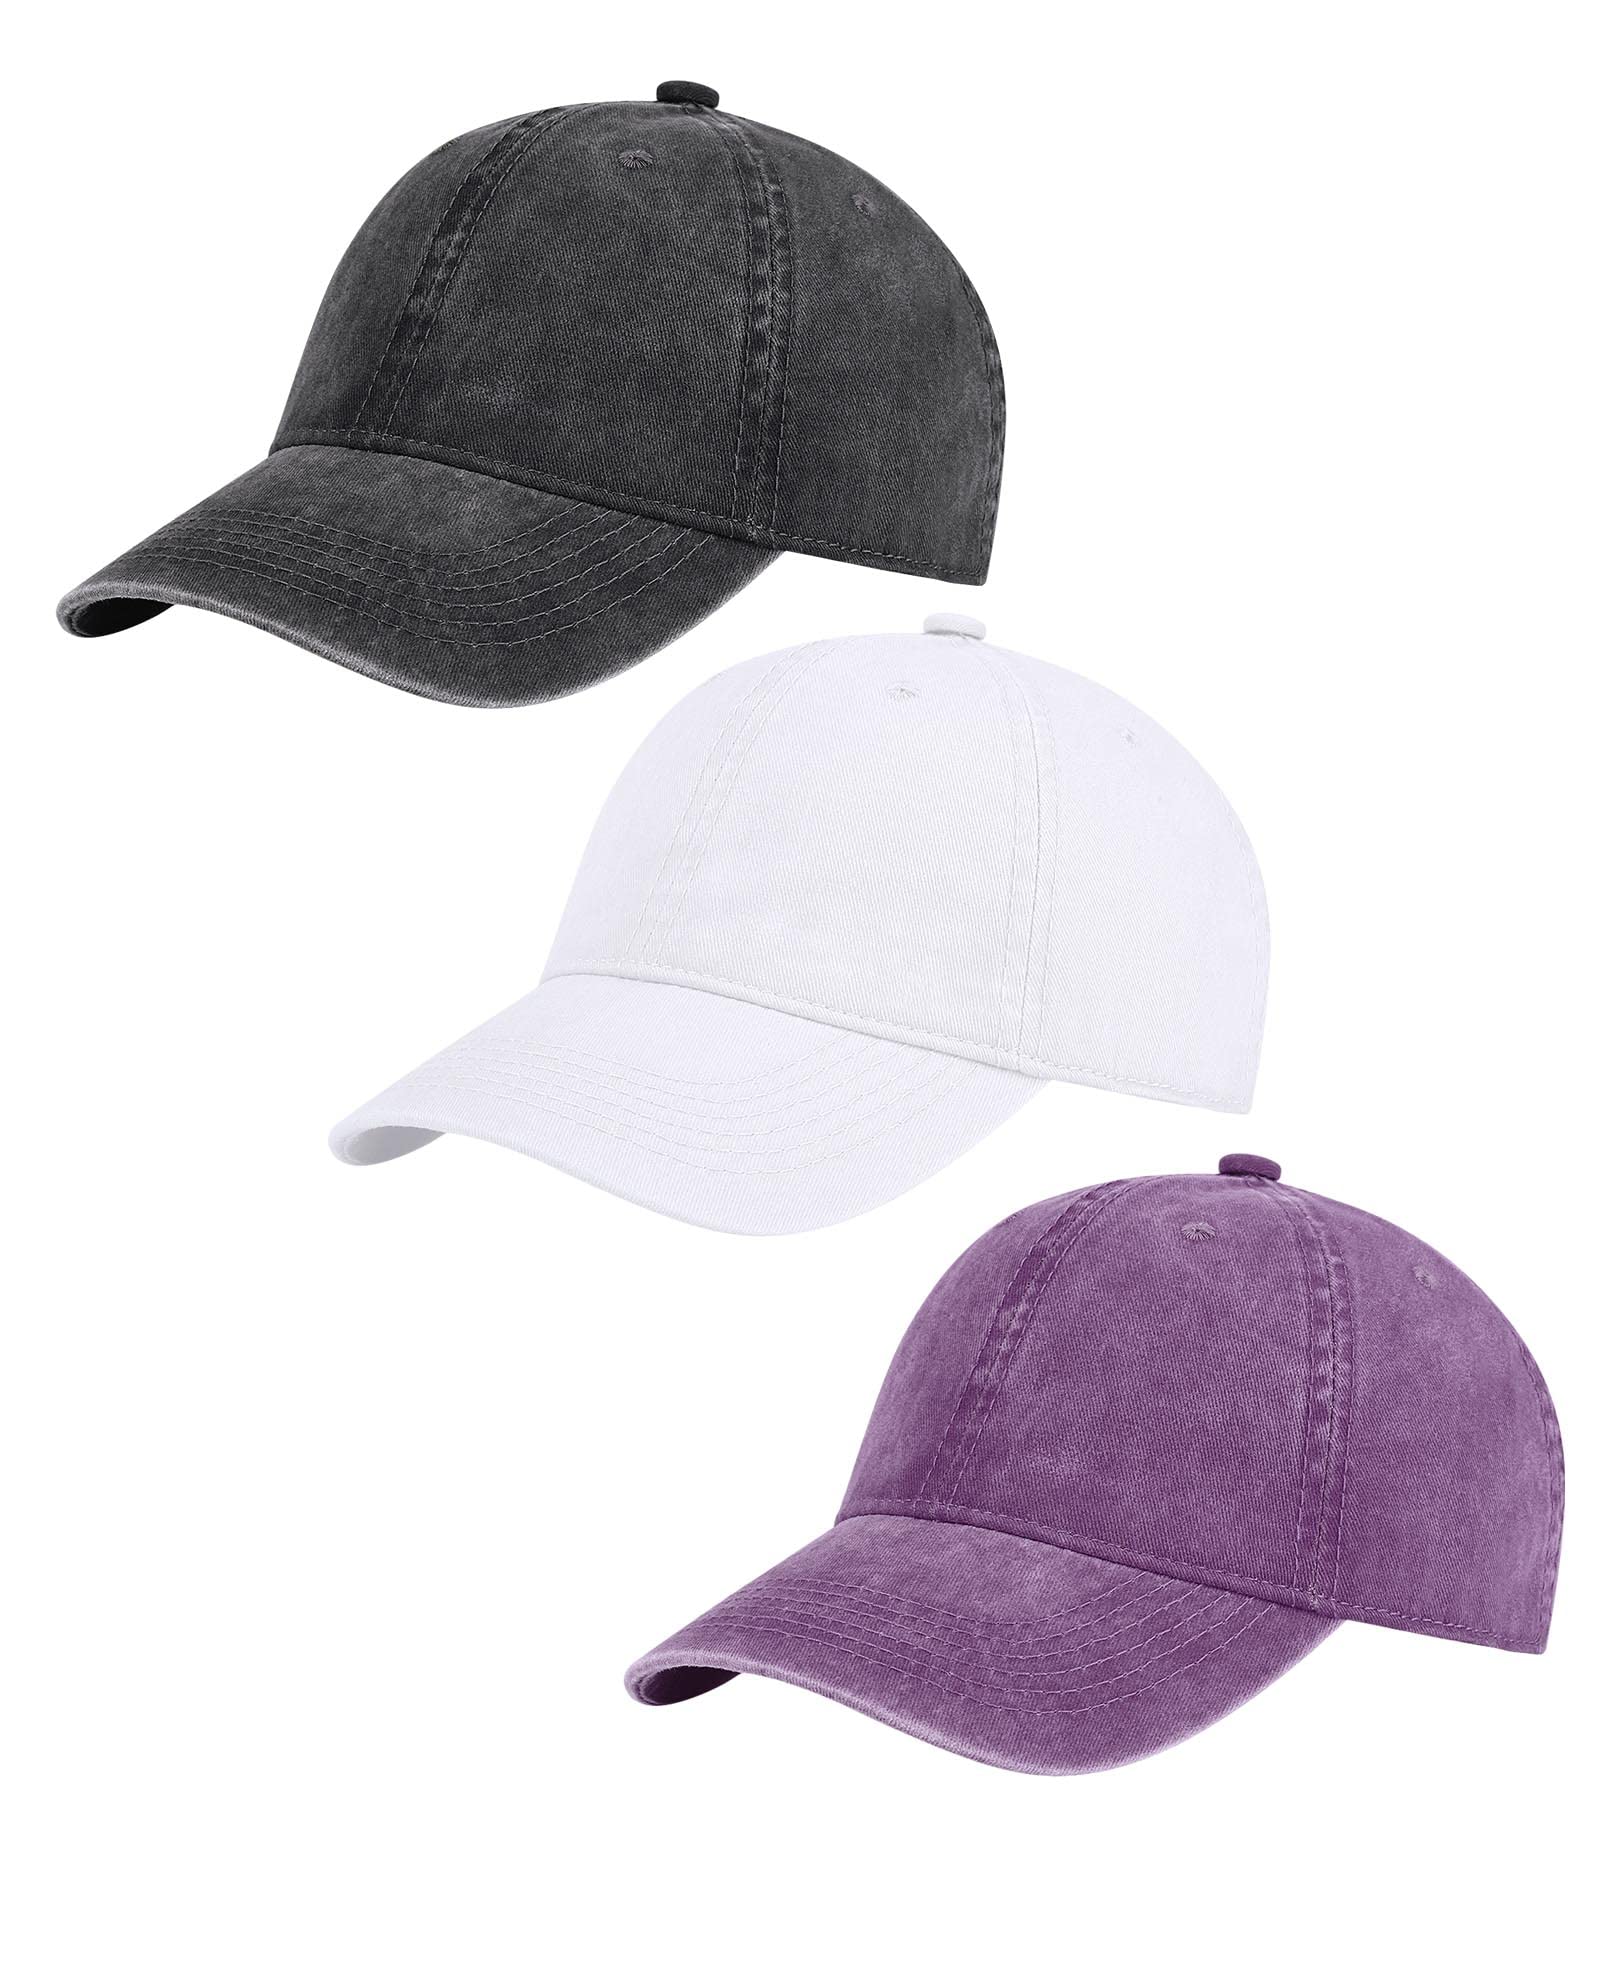 AOSMI 3 Pack Vintage Washed Cotton Adjustable Baseball Caps for Men Women  Unstructured Low Profile Plain Classic Dad Hat Black White Purple